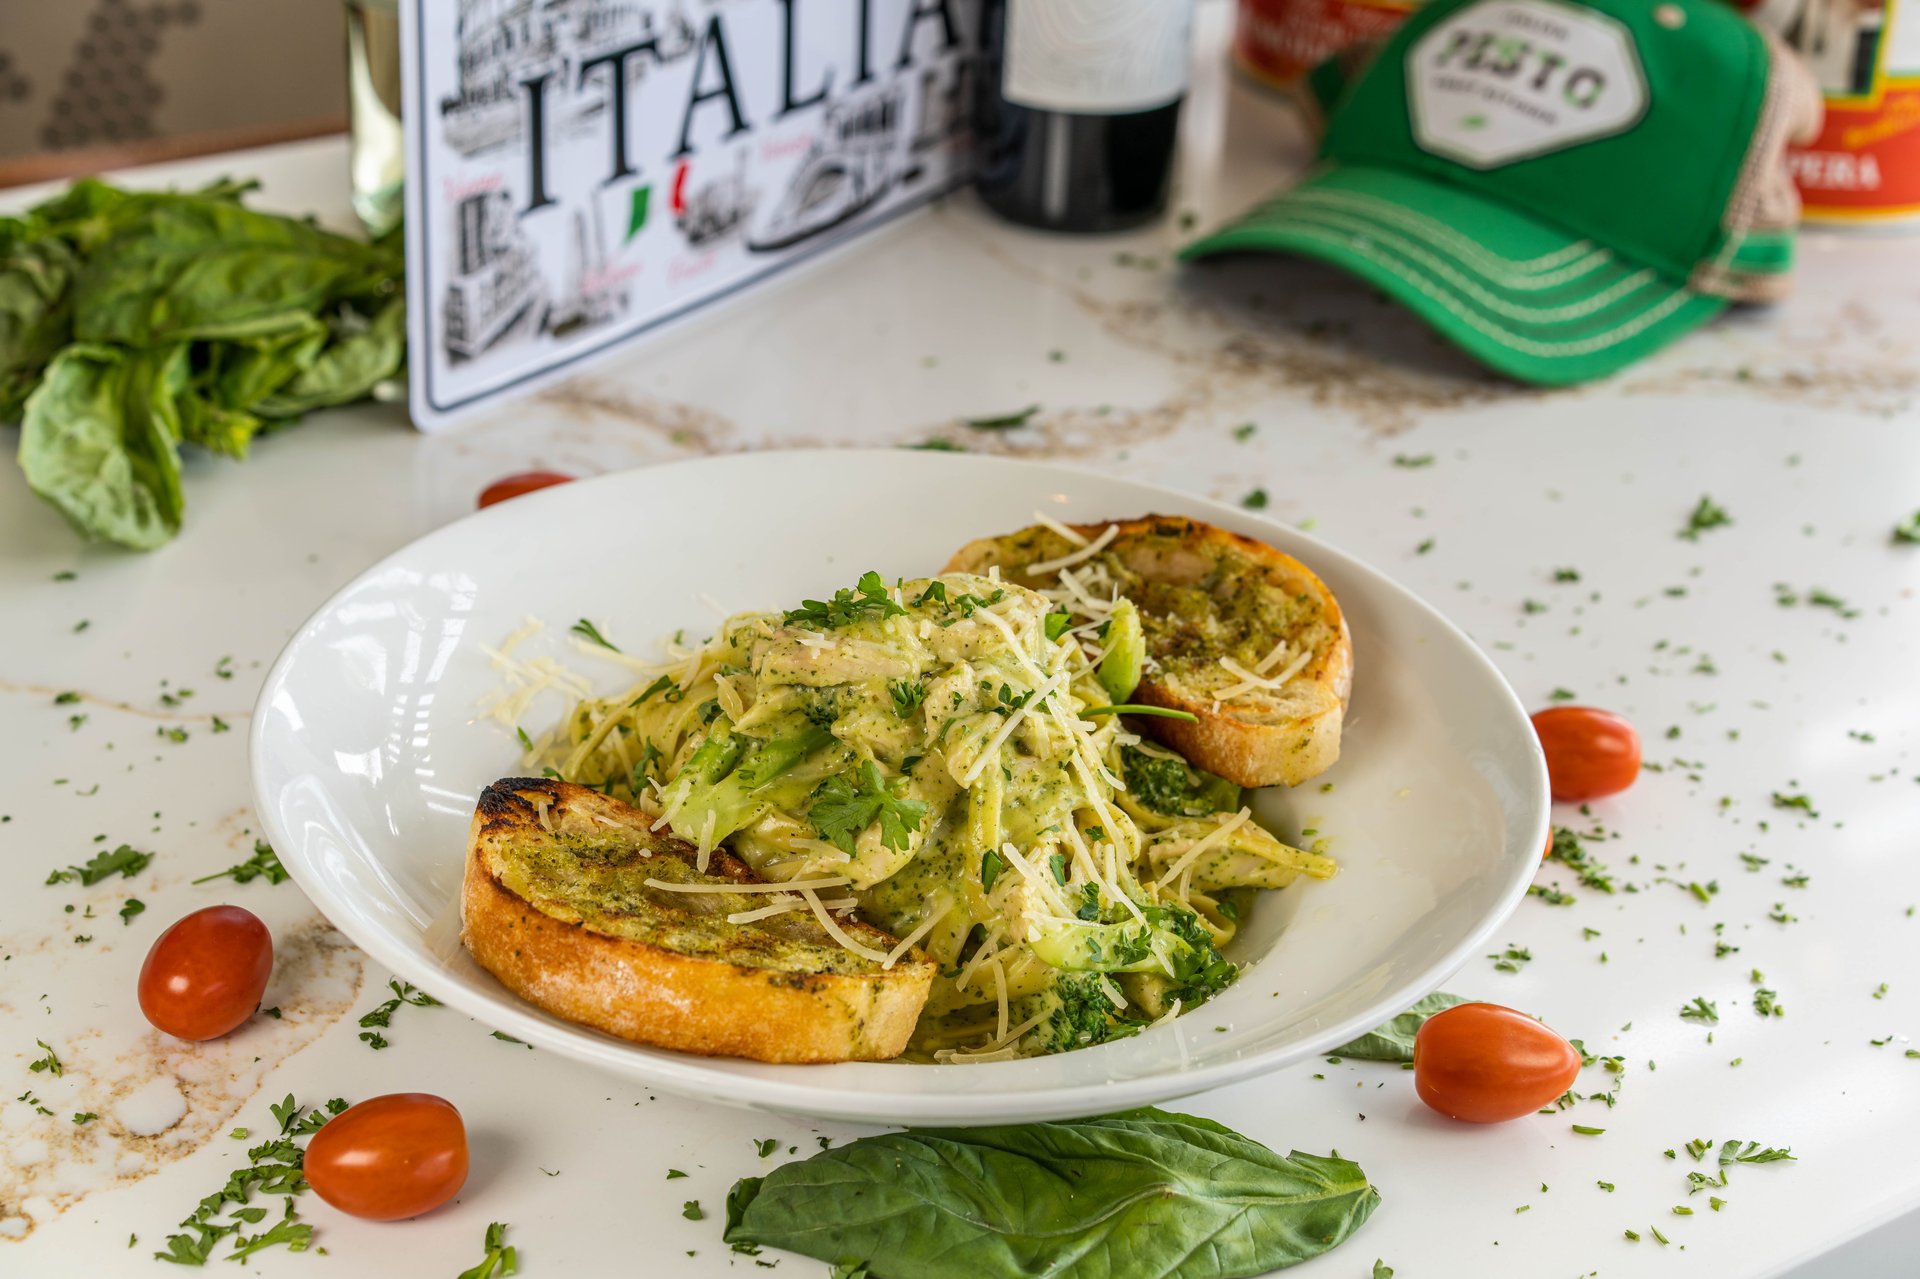 Menu - Mission Valley - Healthy Italian Kitchen - Pesto Craft